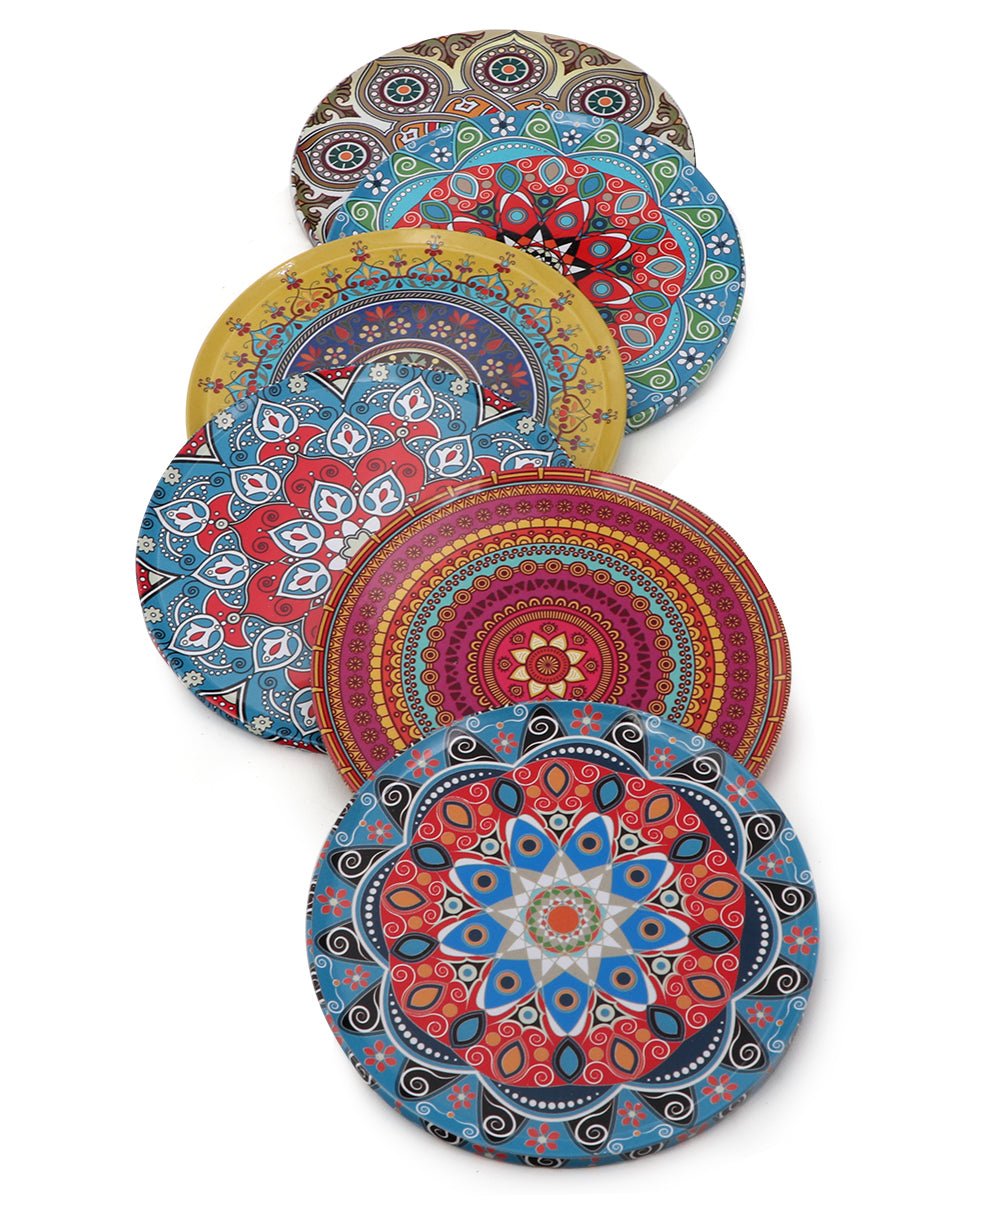 Set of 6 Mandala Coasters - Coasters